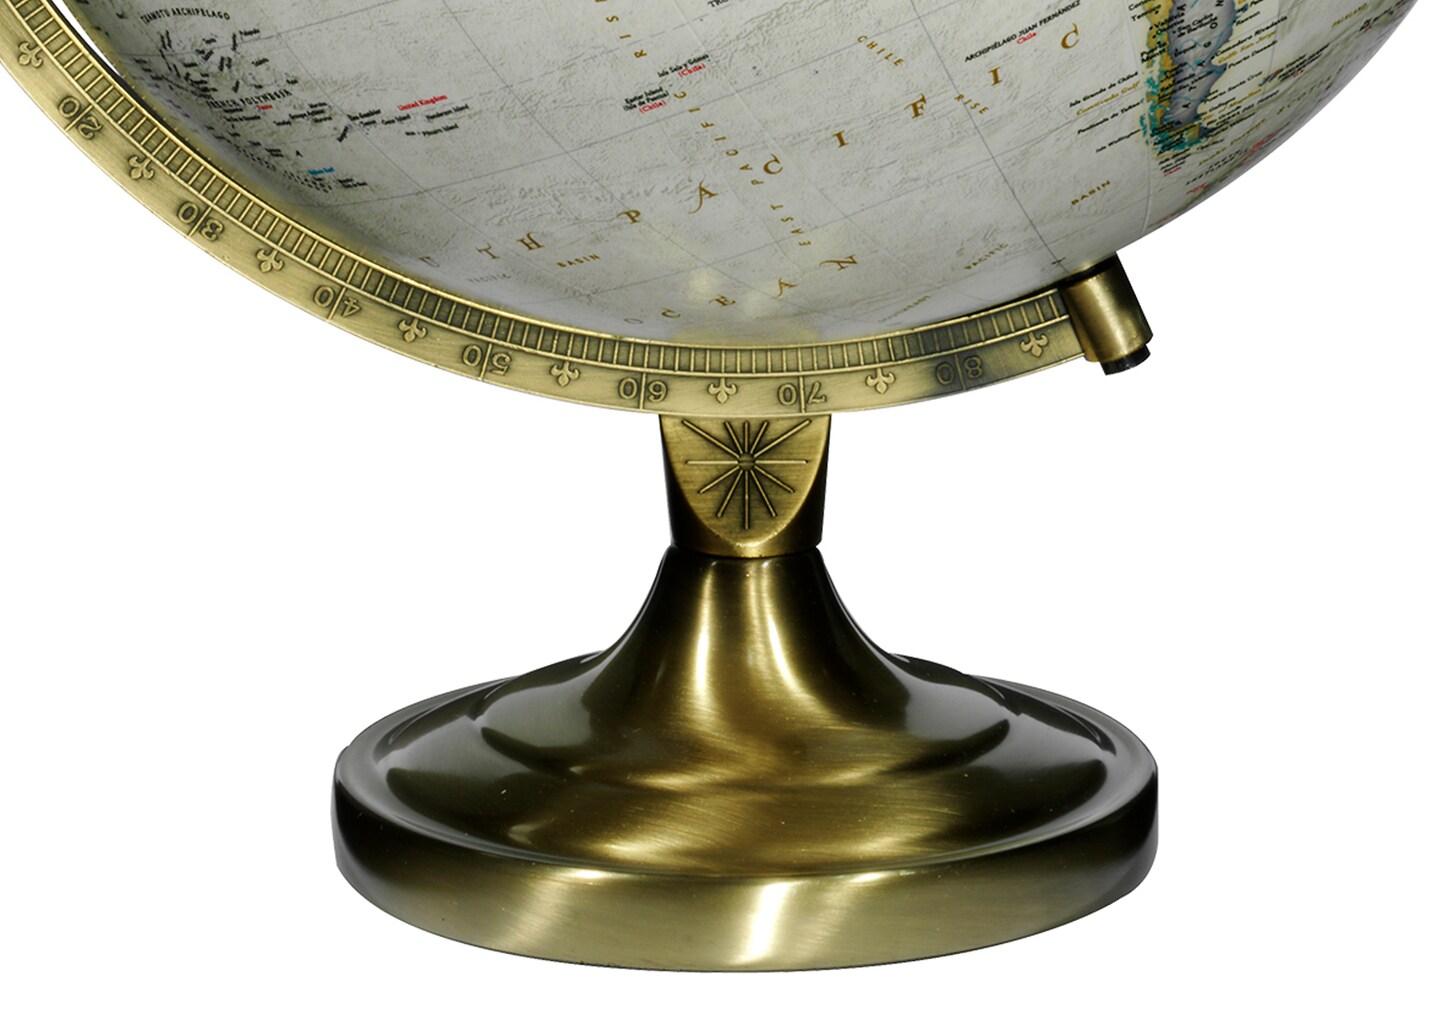 National Geographic Grosvenor 12&#x22; Diameter Antique Ocean World Globe